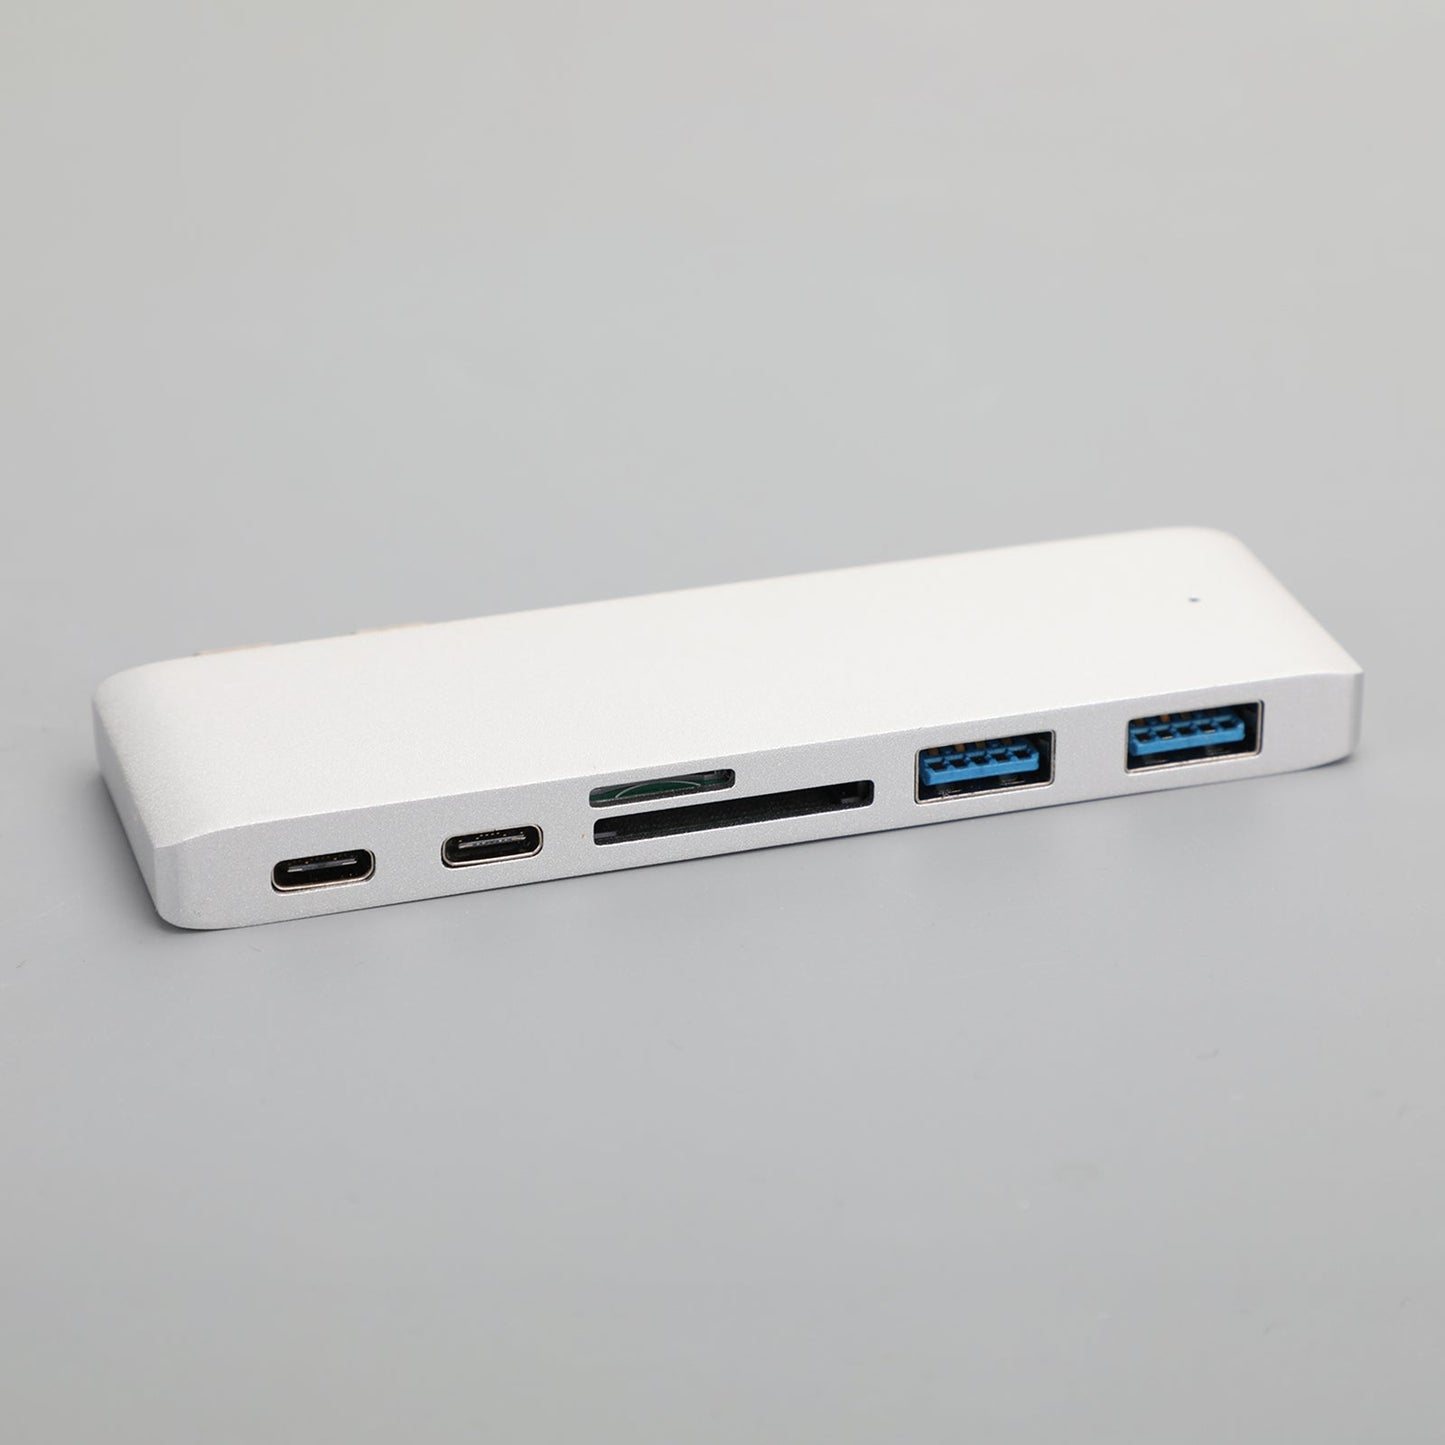 6 in 1 Multi-function USB3.0 Hub Adapter USB Type C Docking 2 USB For MacBook